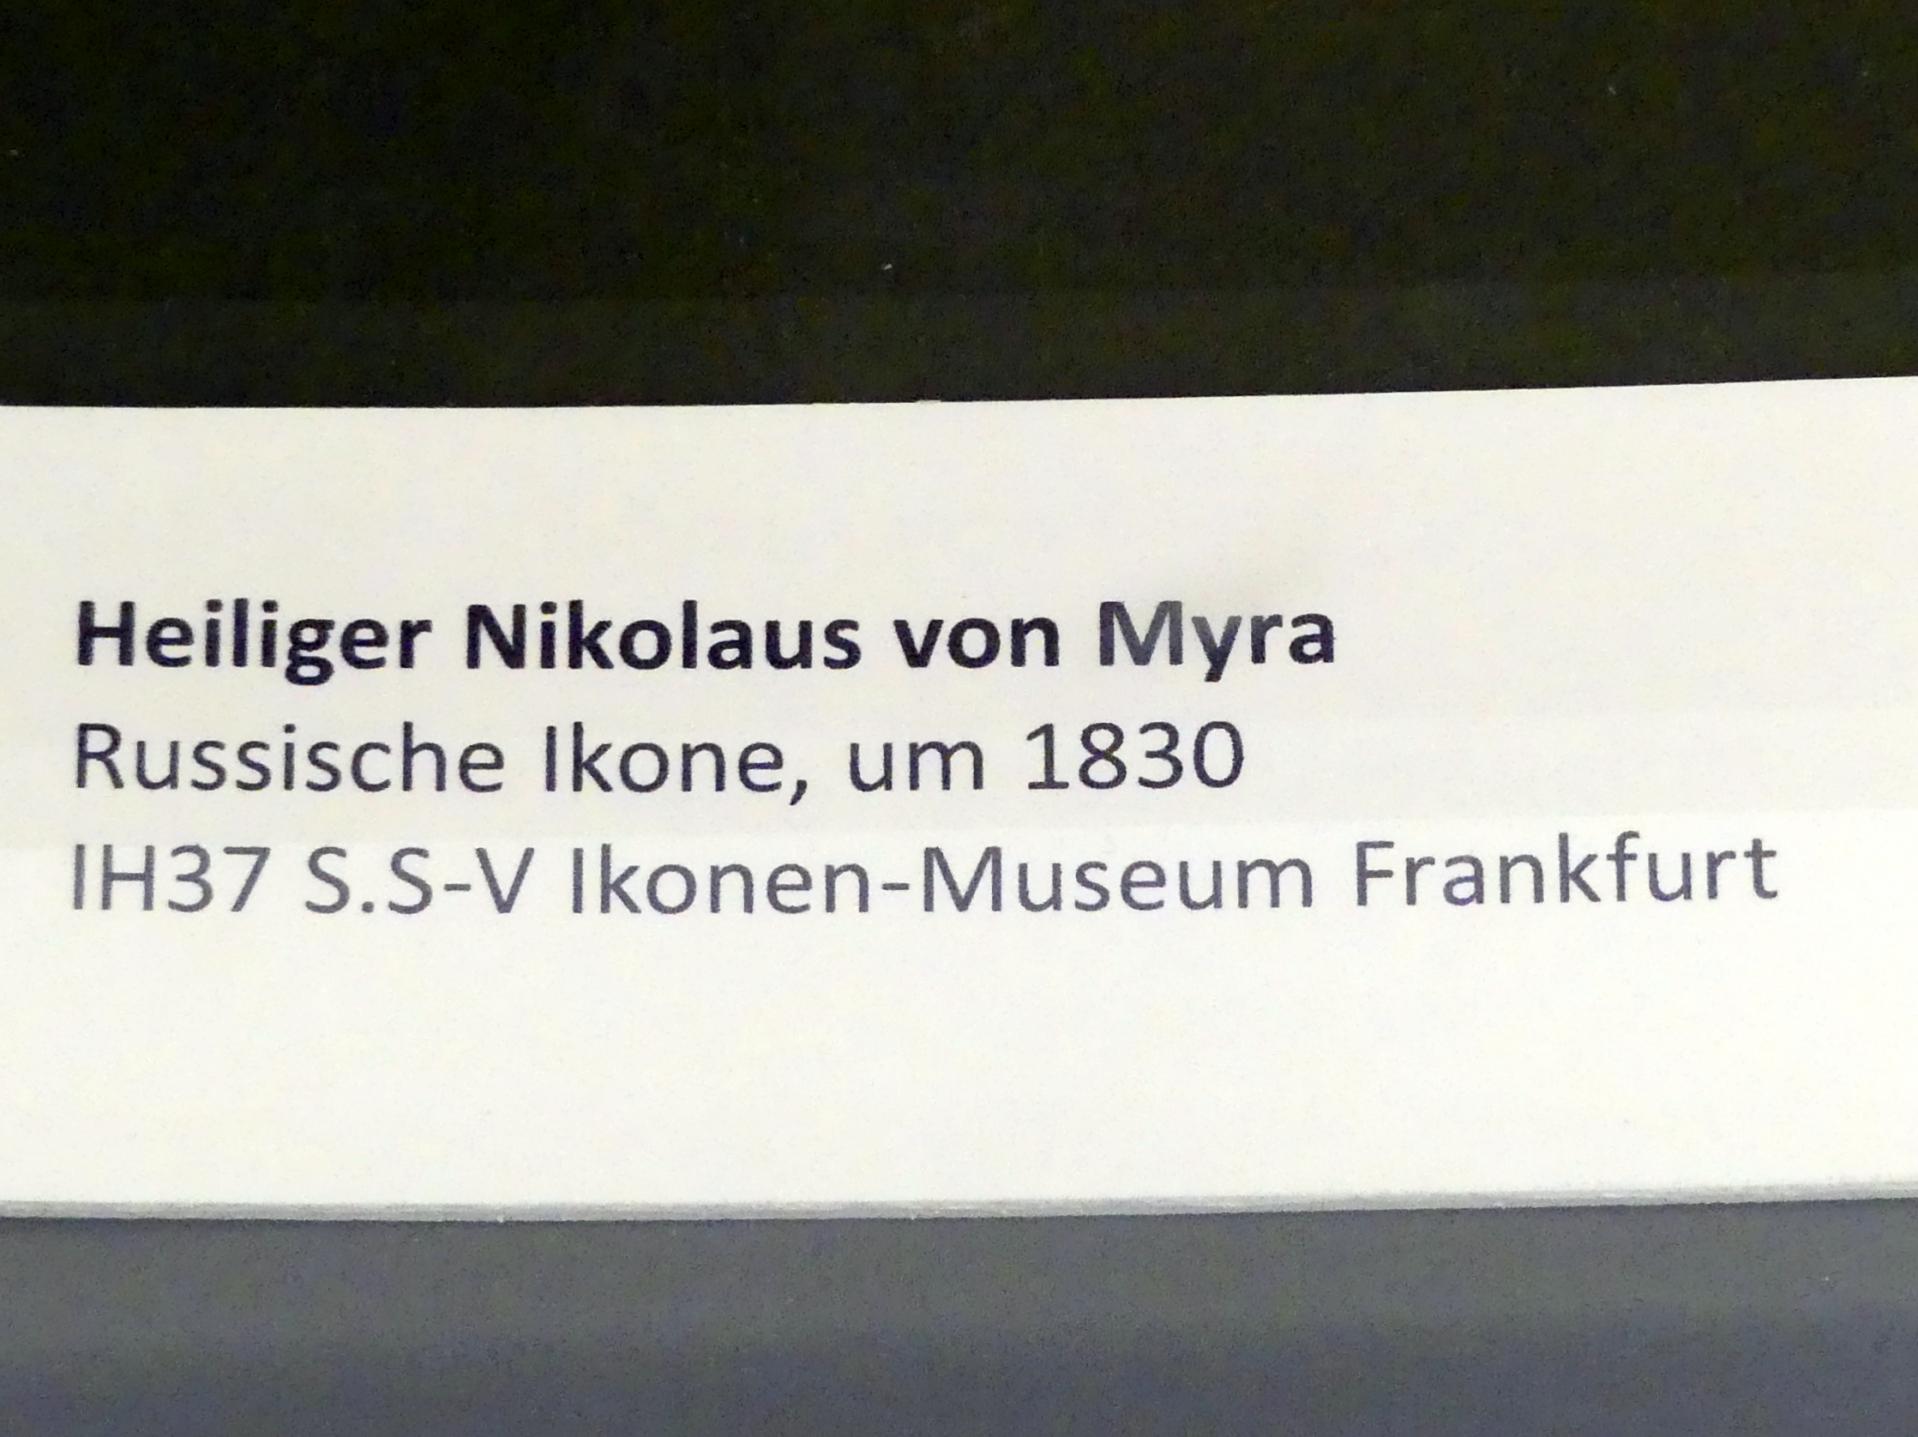 Heiliger Nikolaus von Myra, Frankfurt am Main, Ikonen-Museum, Obergeschoss, um 1830, Bild 2/2